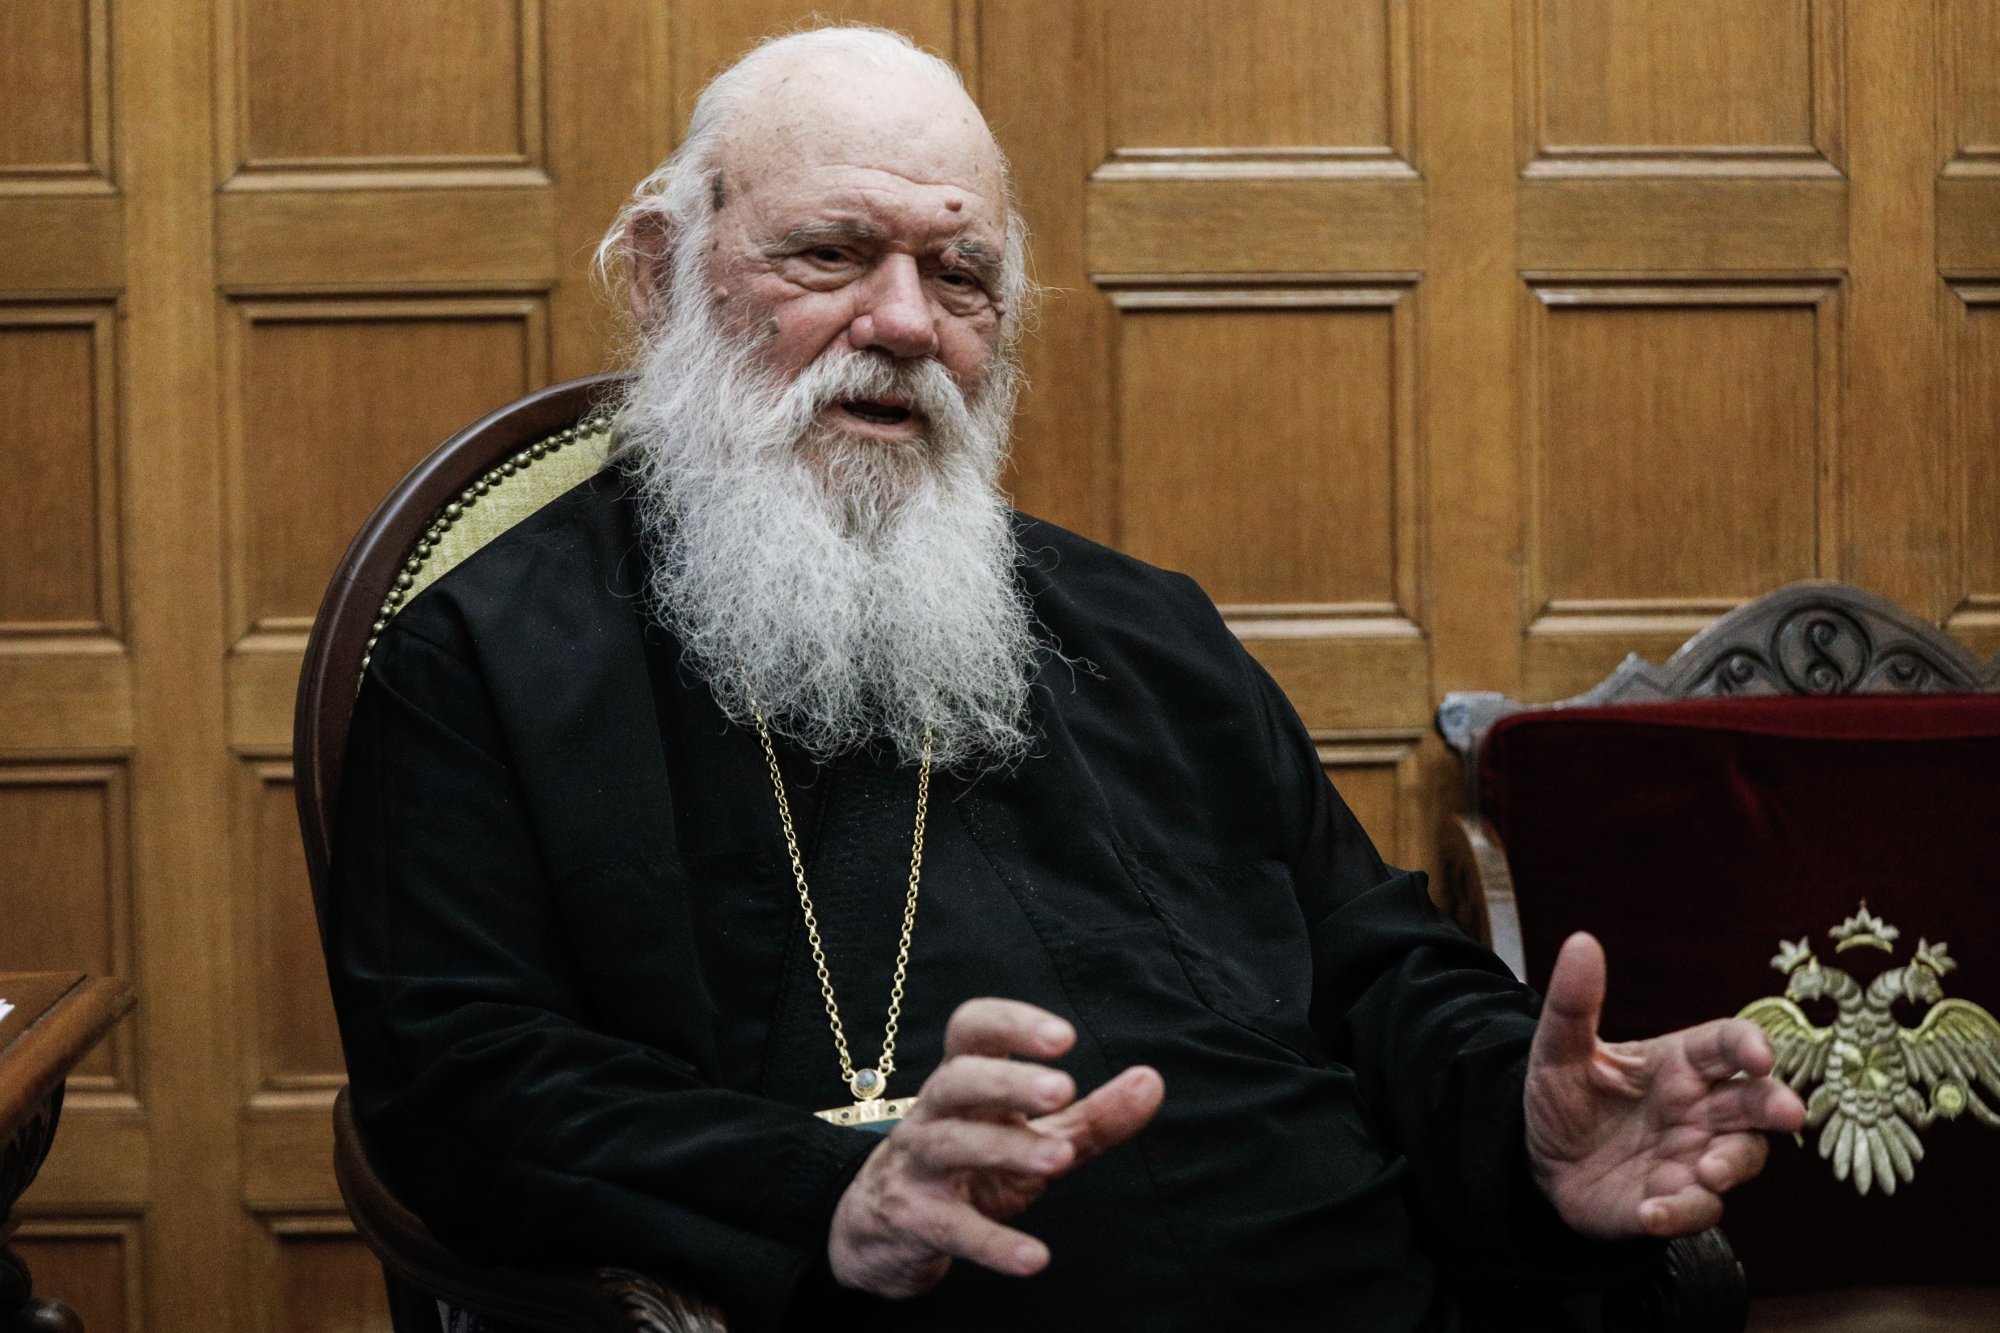 Archbishop Ieronymos II Calls for Roll-Call Vote in Greek Parliament on Same-Sex Marriage Bill